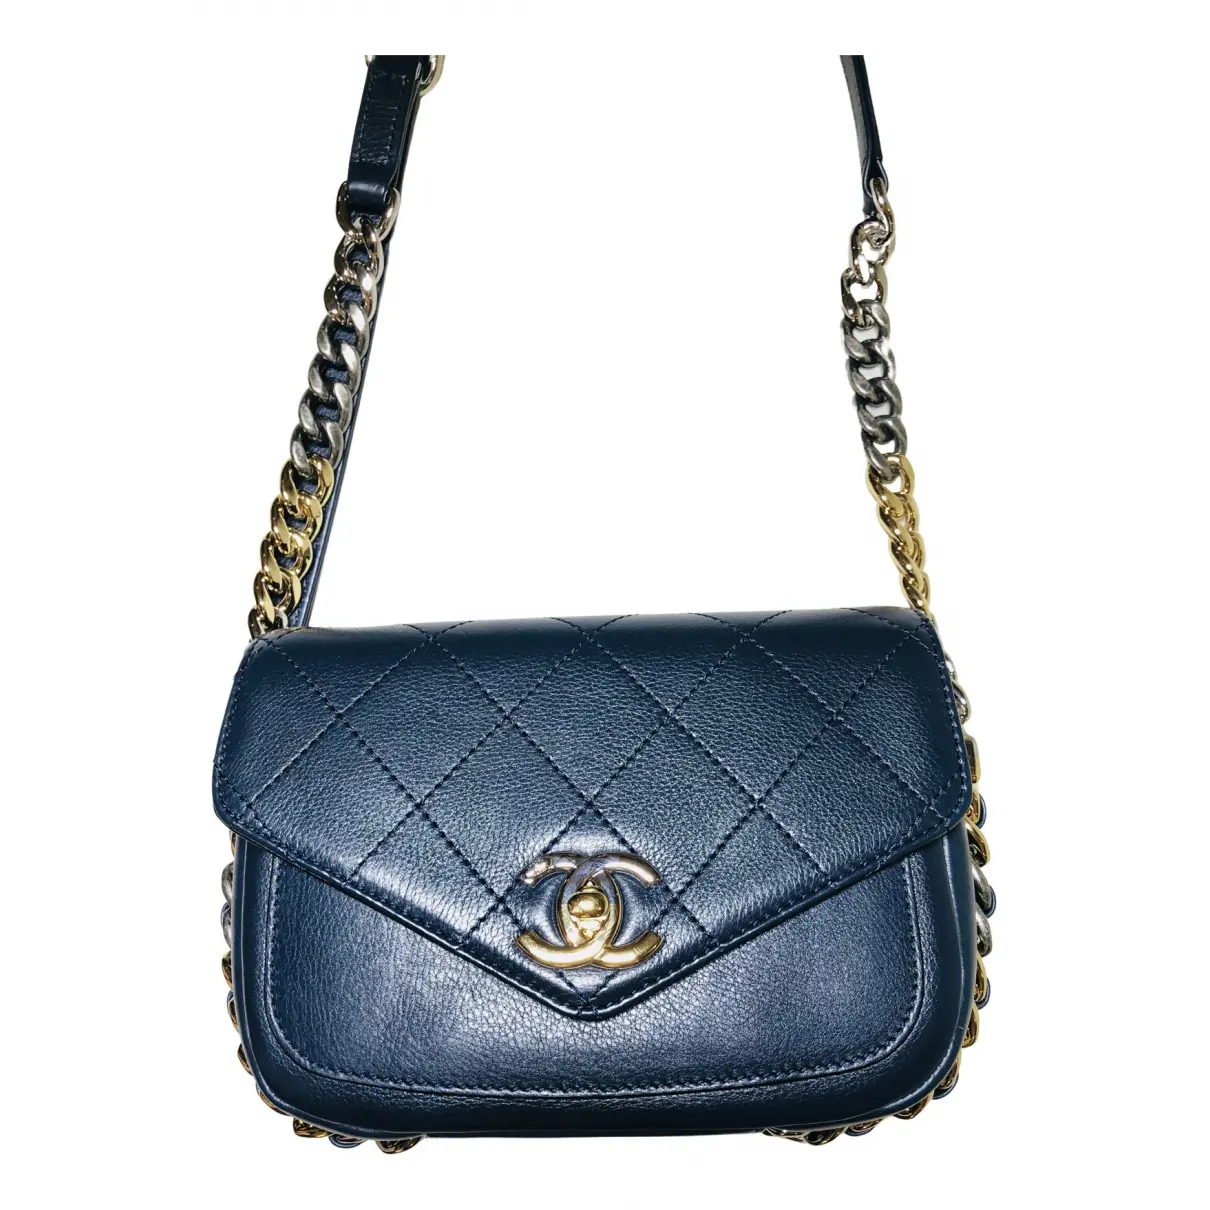 Trendy CC leather handbag